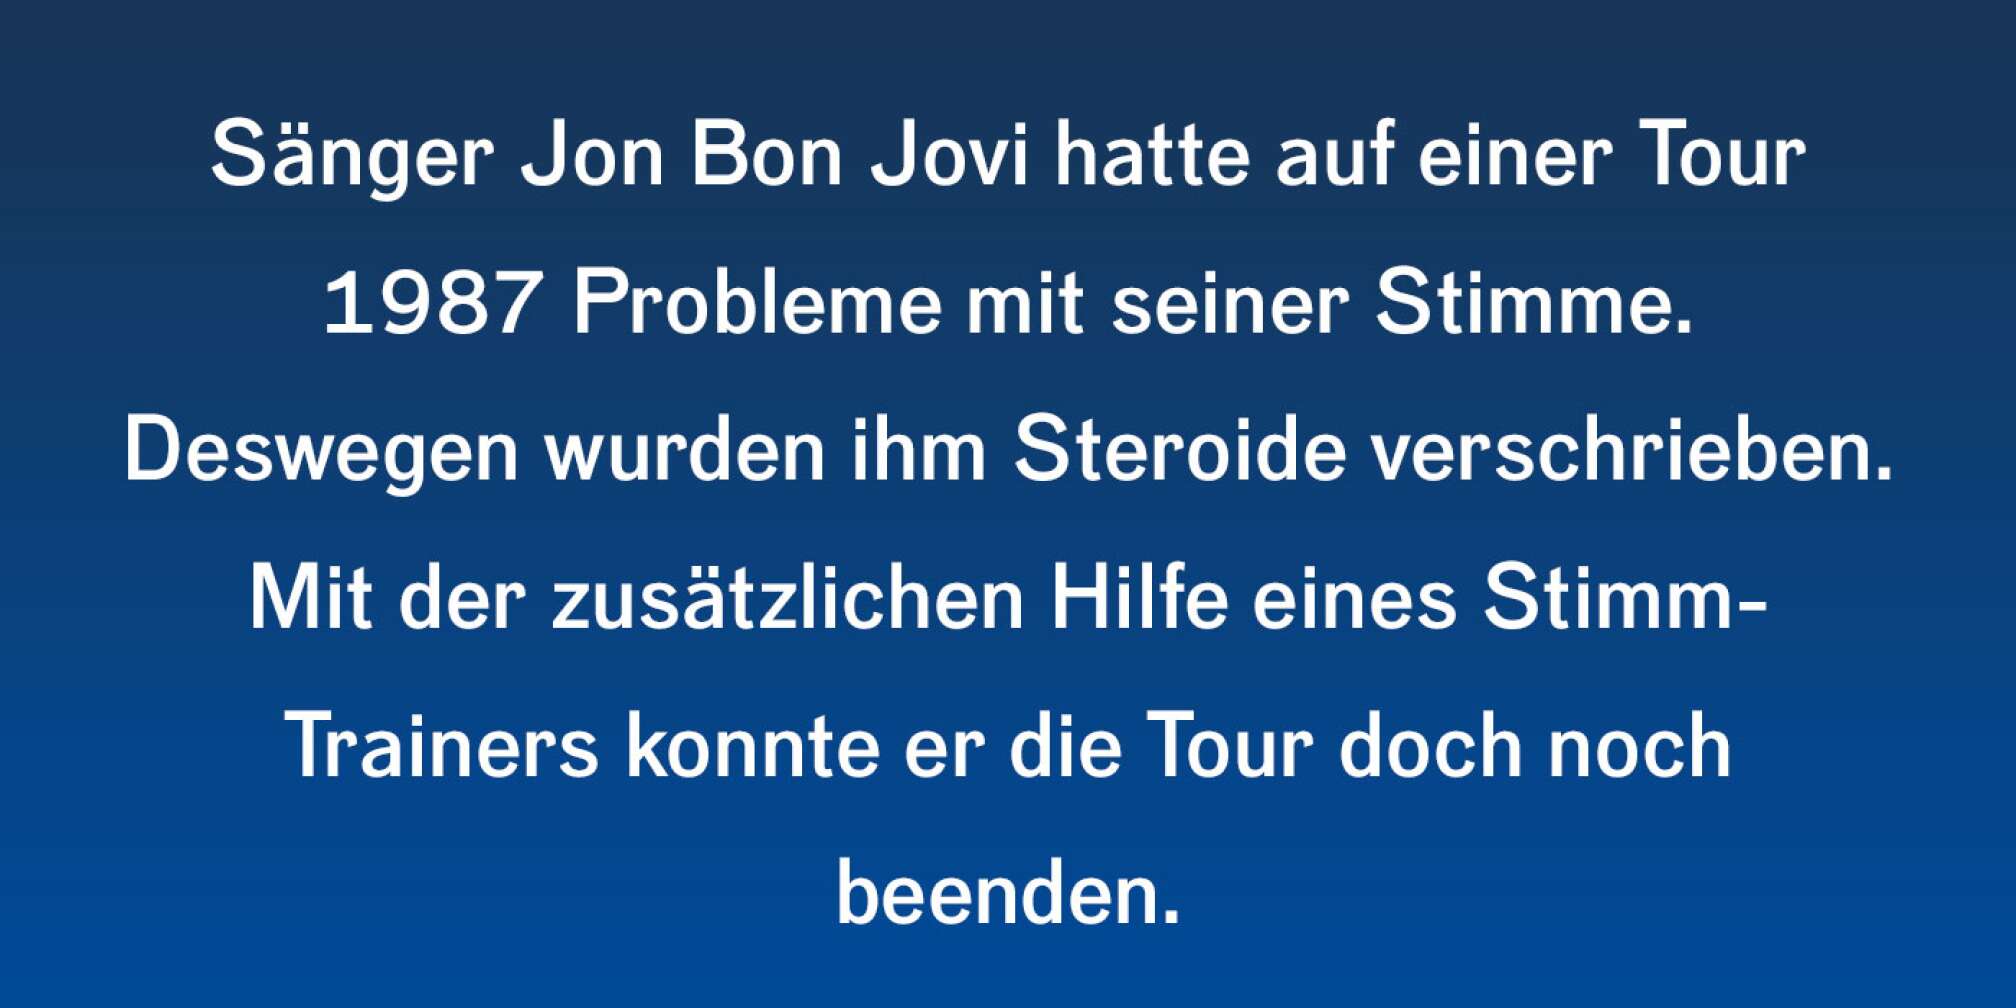 Fakt über Bon Jovi als Fließtext